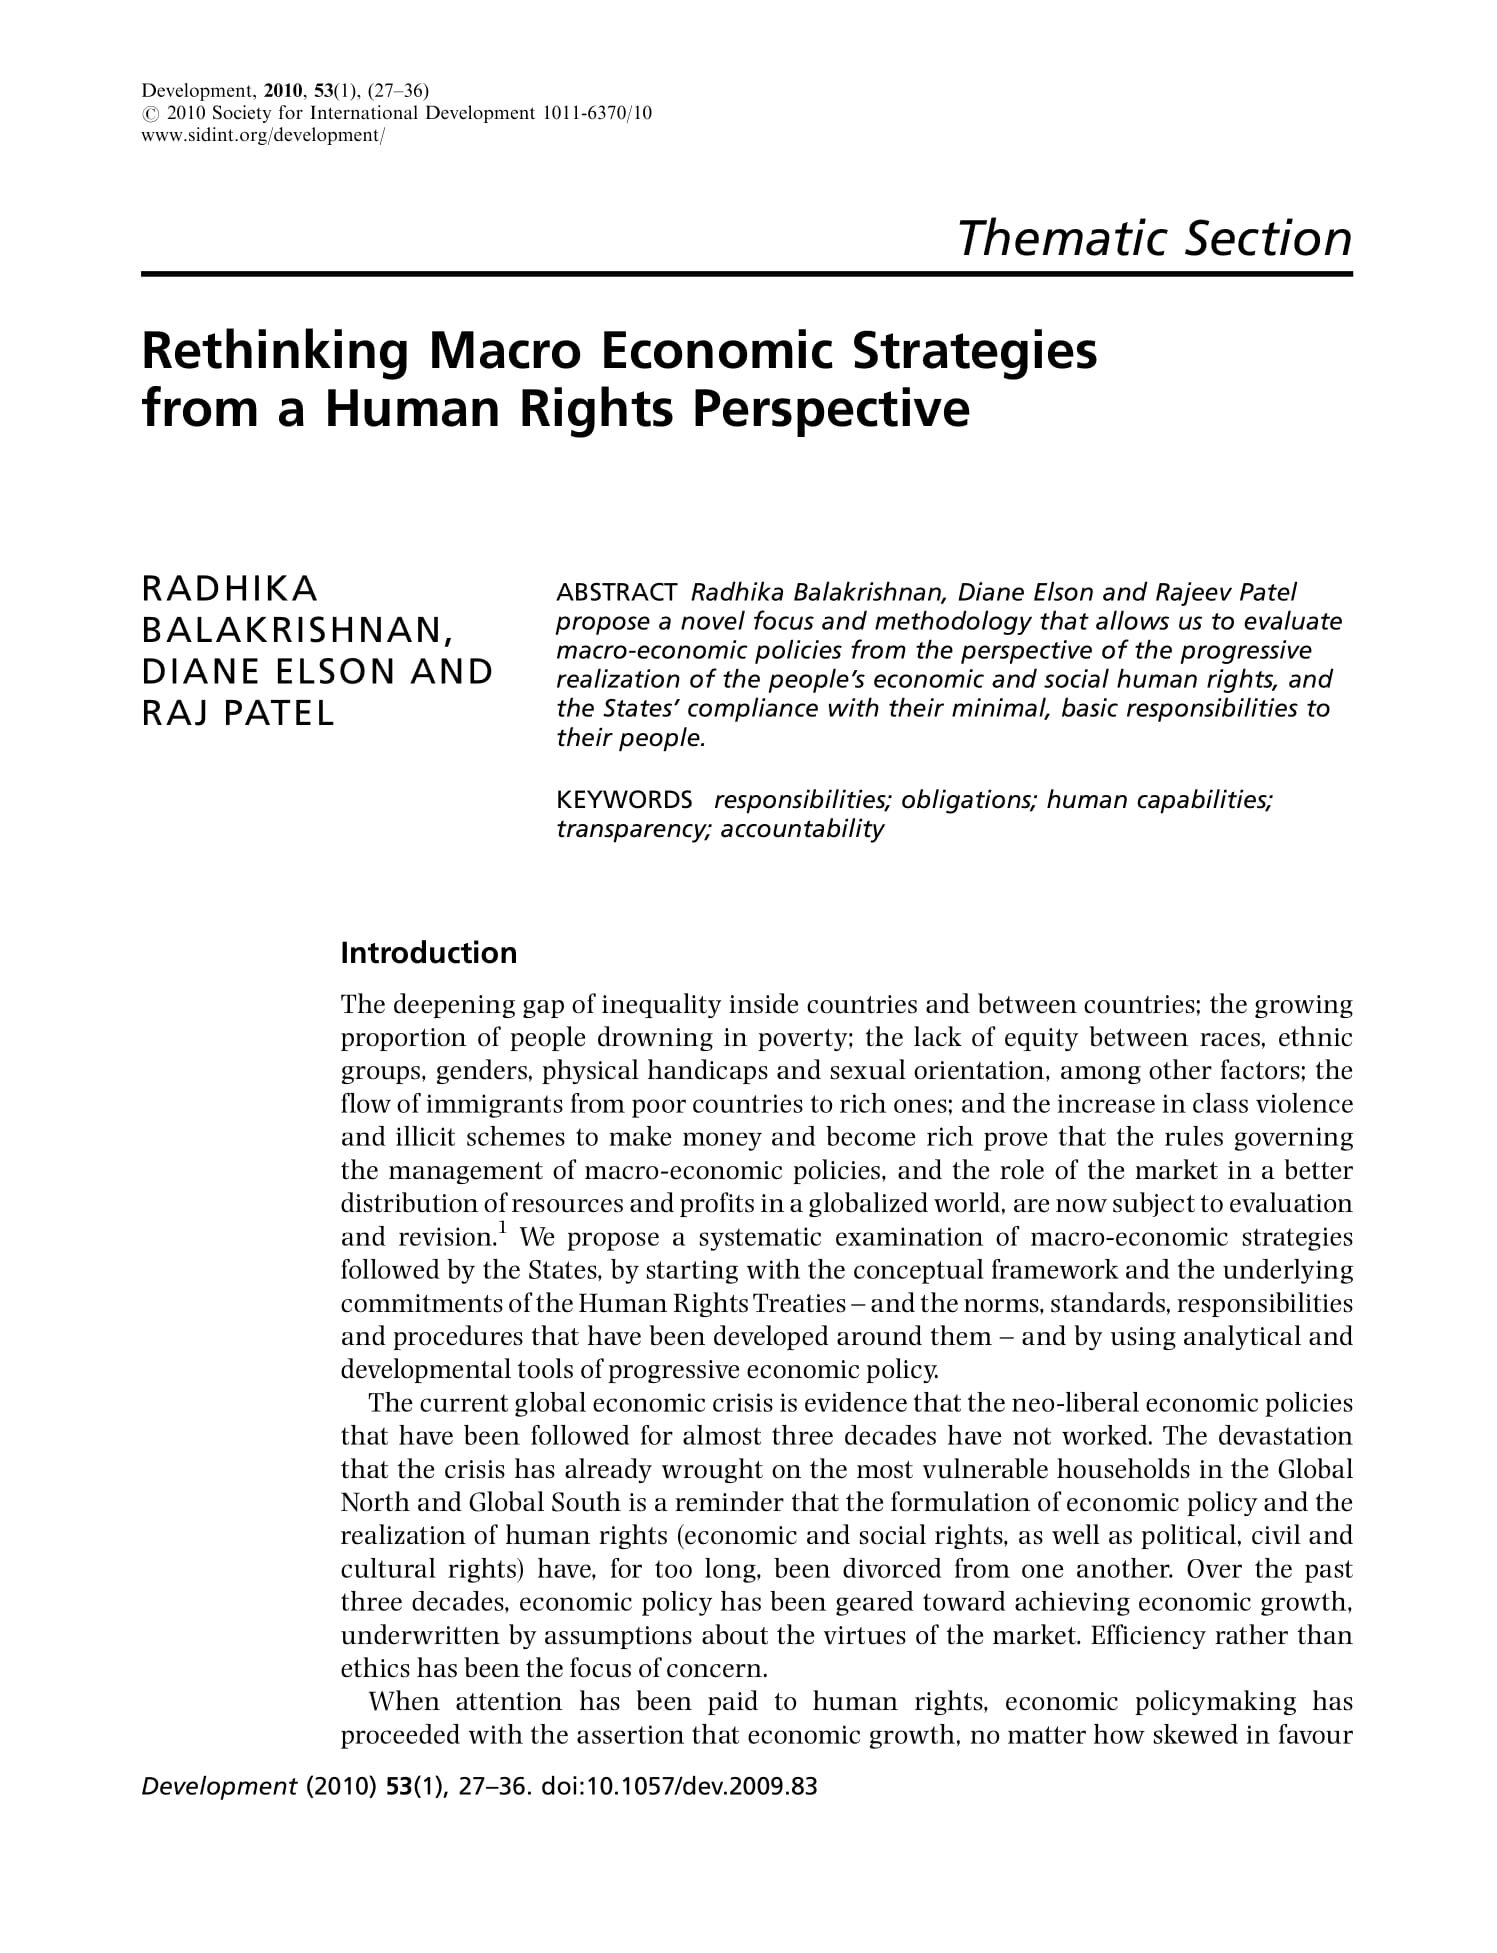 Balakrishnan2010_Article_RethinkingMacroEconomicStrateg-01.jpg